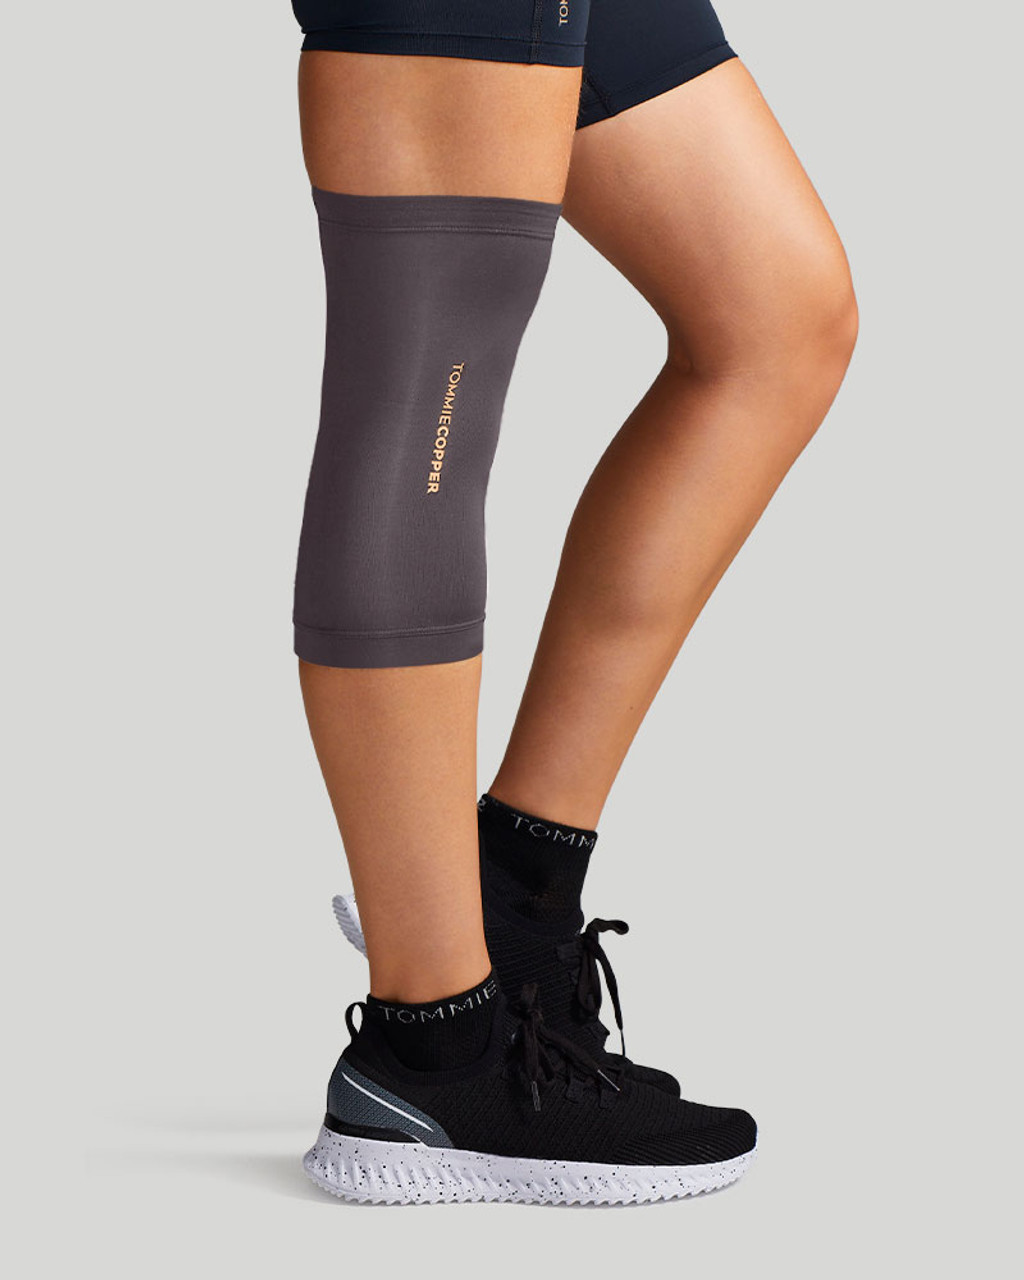 Tommie Copper Knee Brace Camo Compression Sleeve Joint Pain Relief L/XL D19